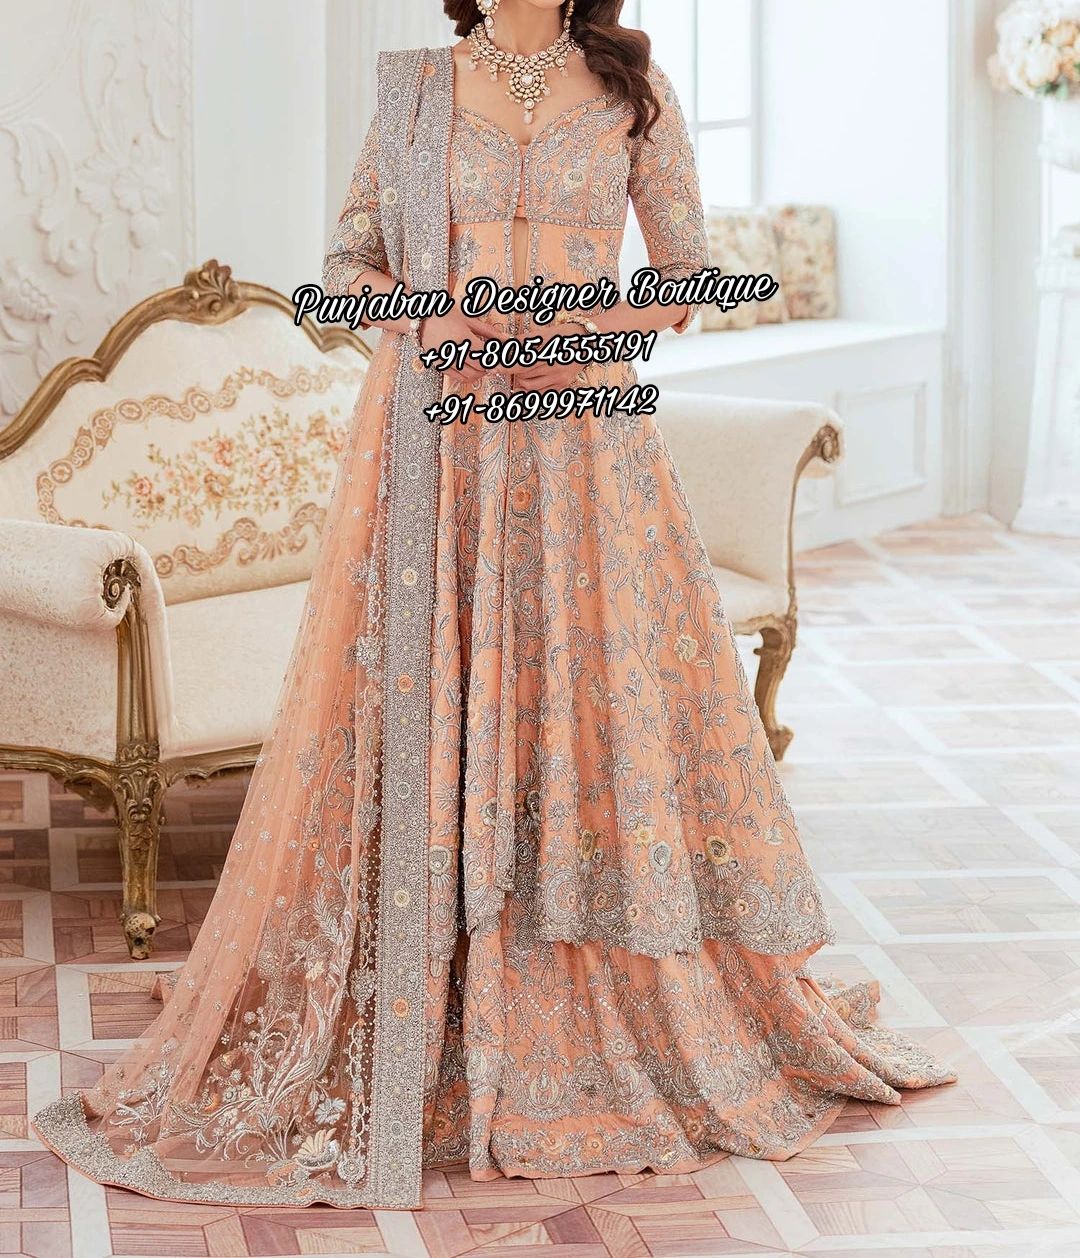 Designer Dress Lehenga | Punjaban Designer Boutique